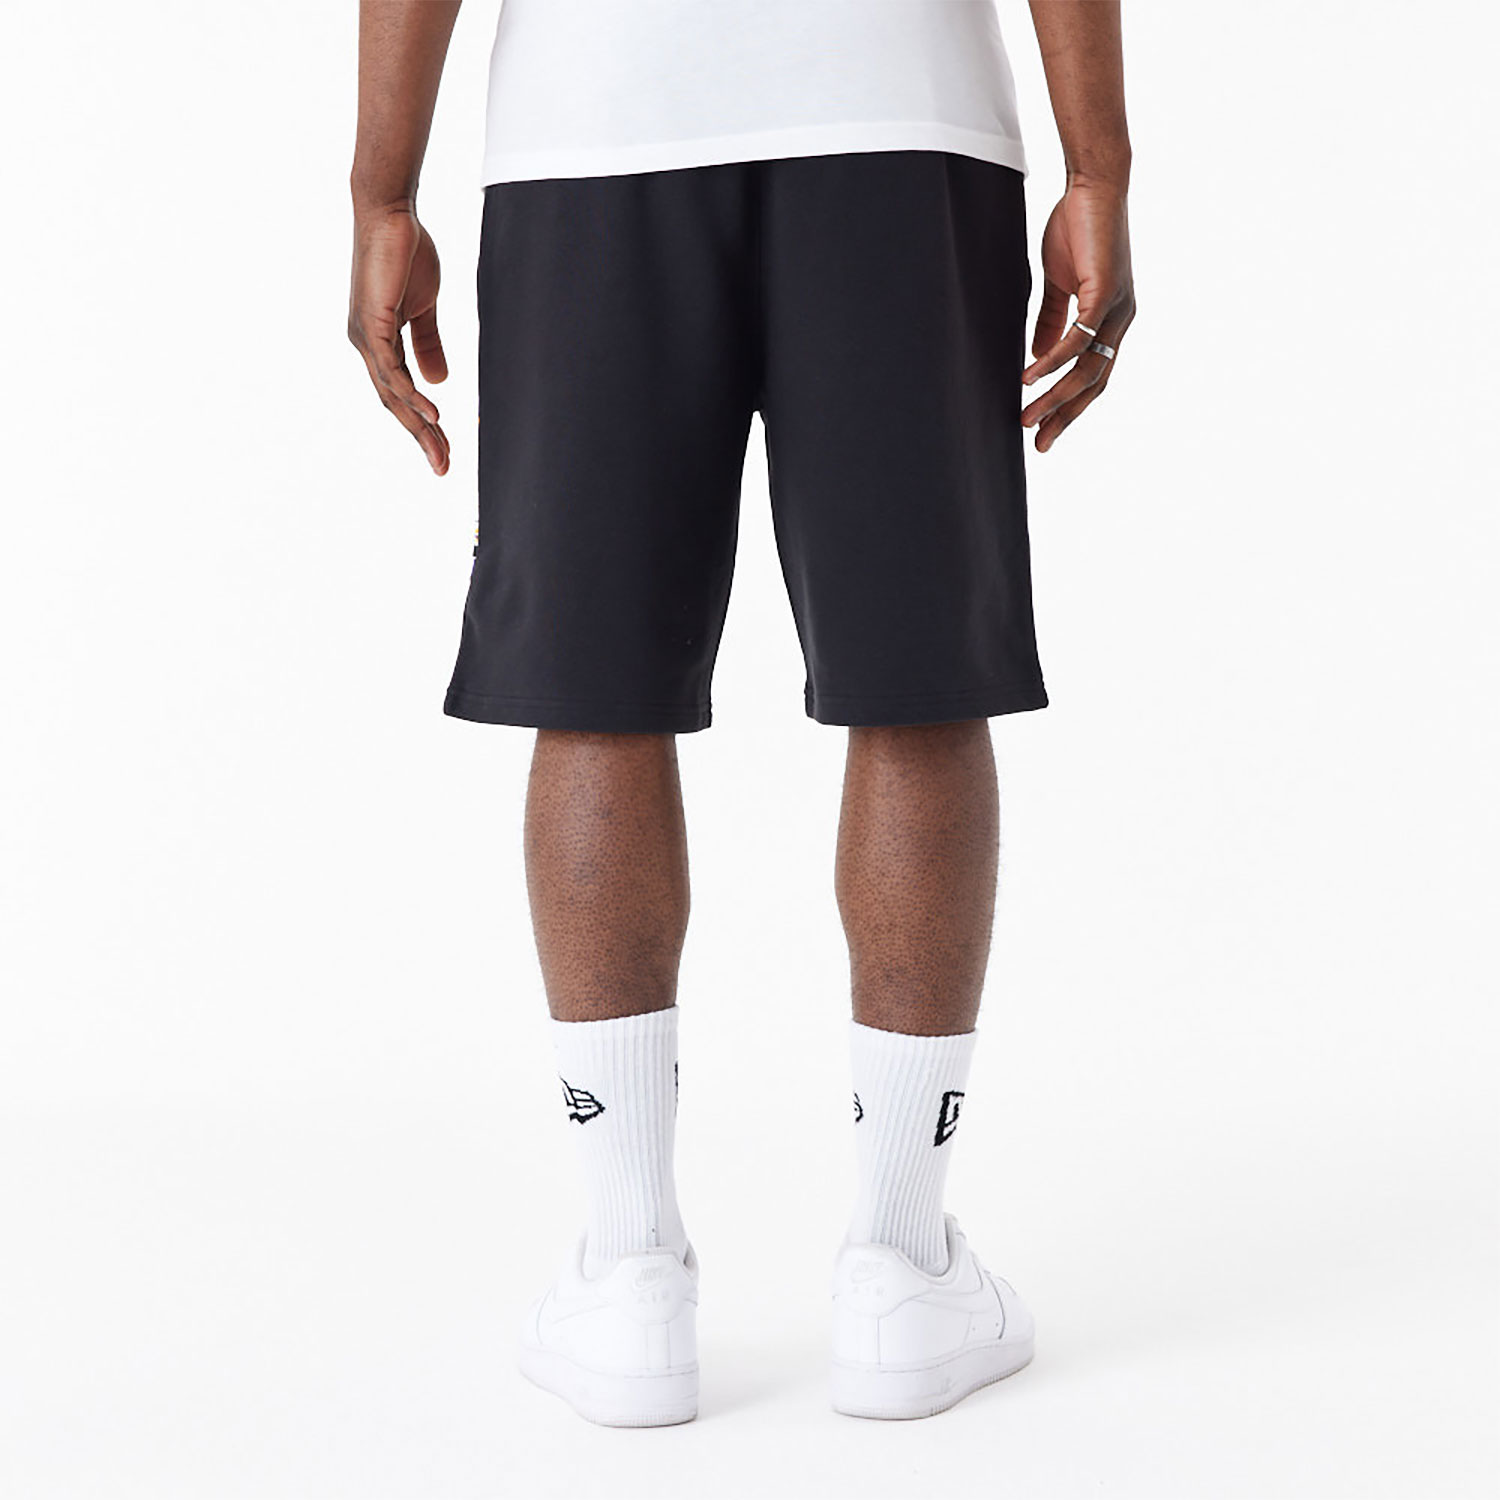 LA Lakers NBA Infill Graphic Black Shorts